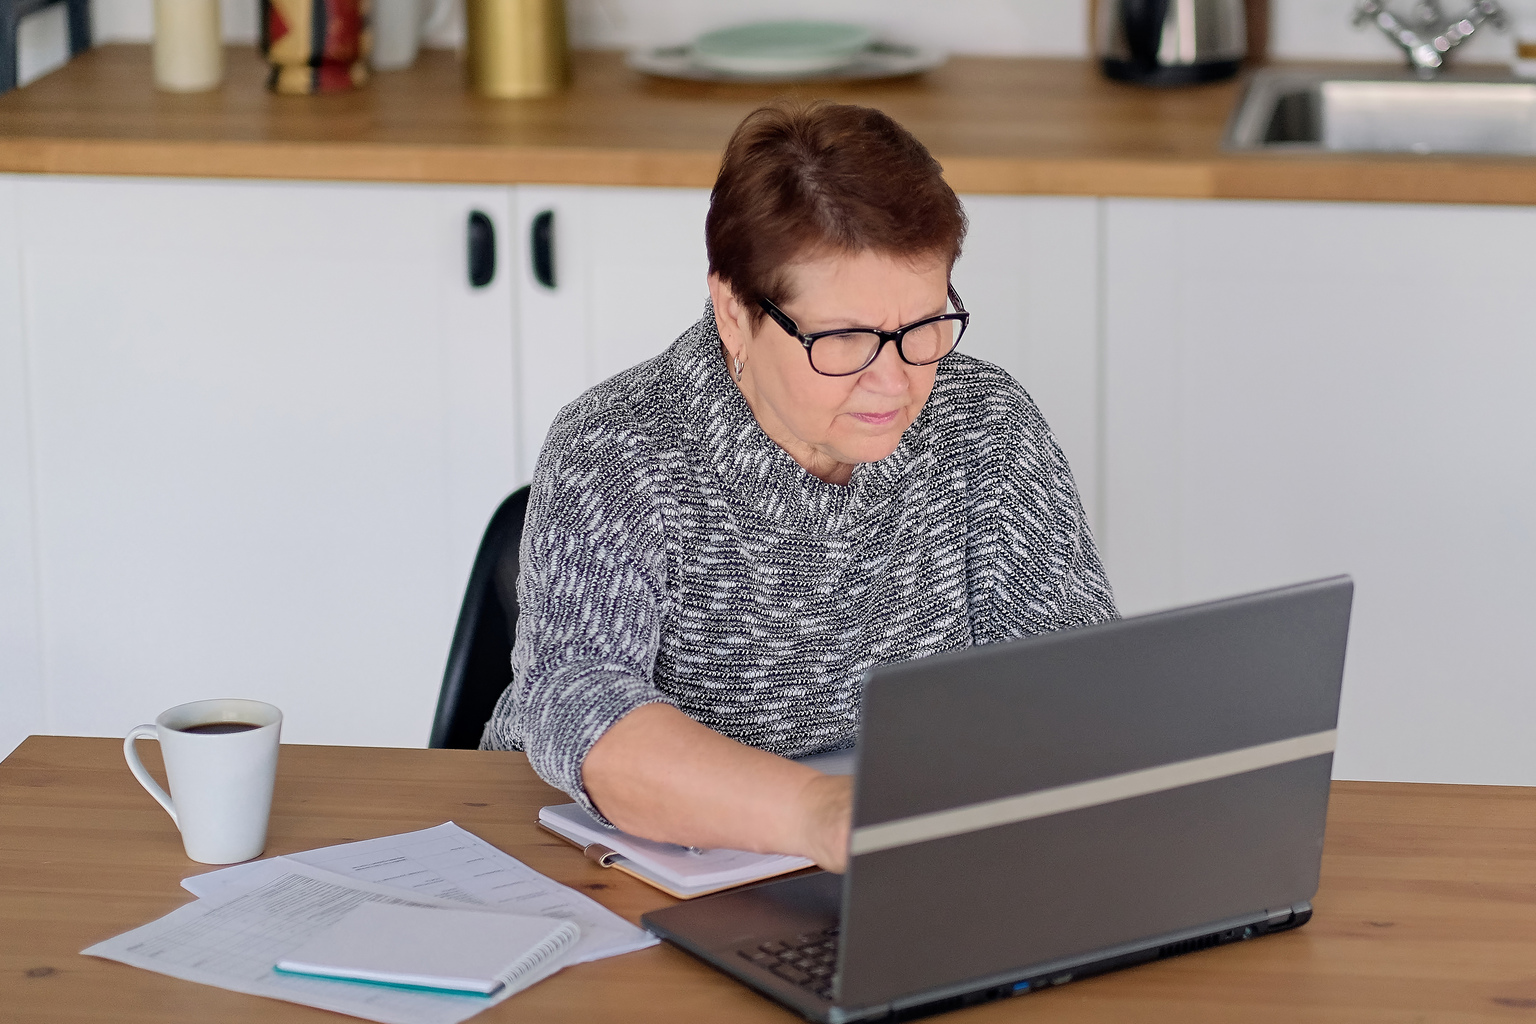 Senior woman using laptop for websurfing in her kitchen